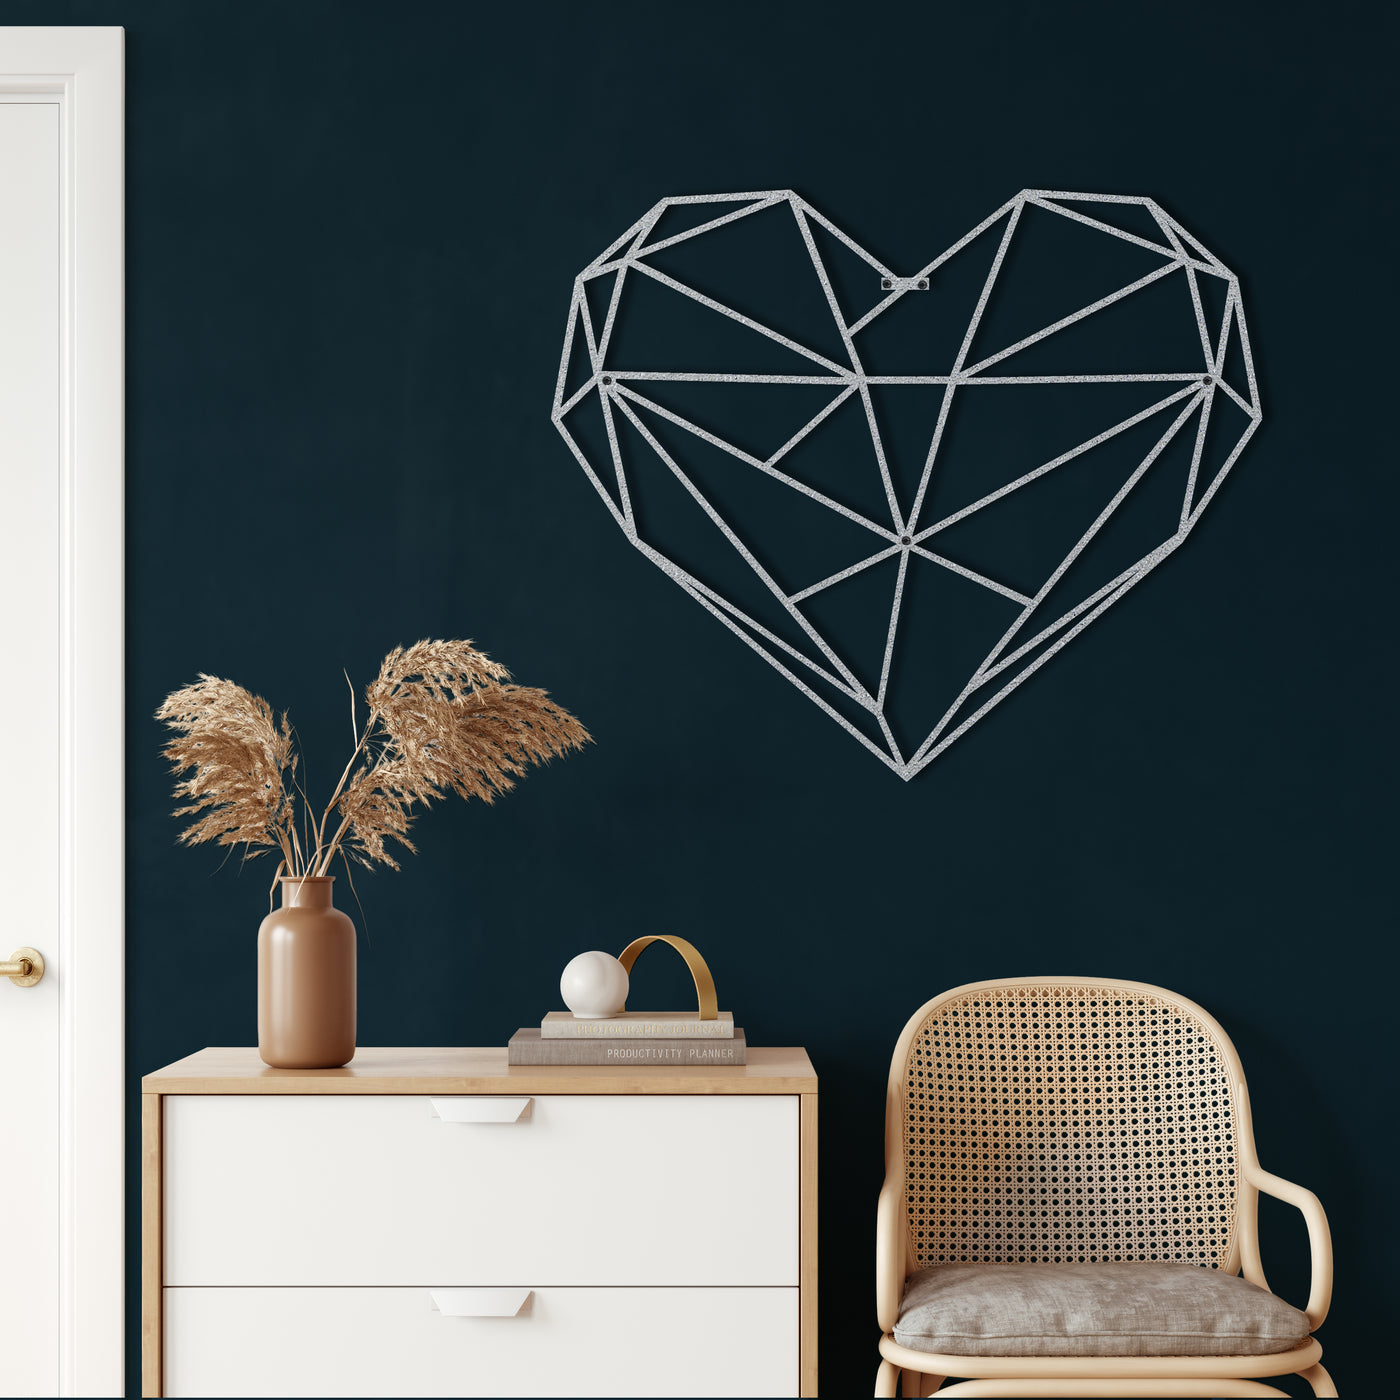 Geometric Heart Metal Wall Art